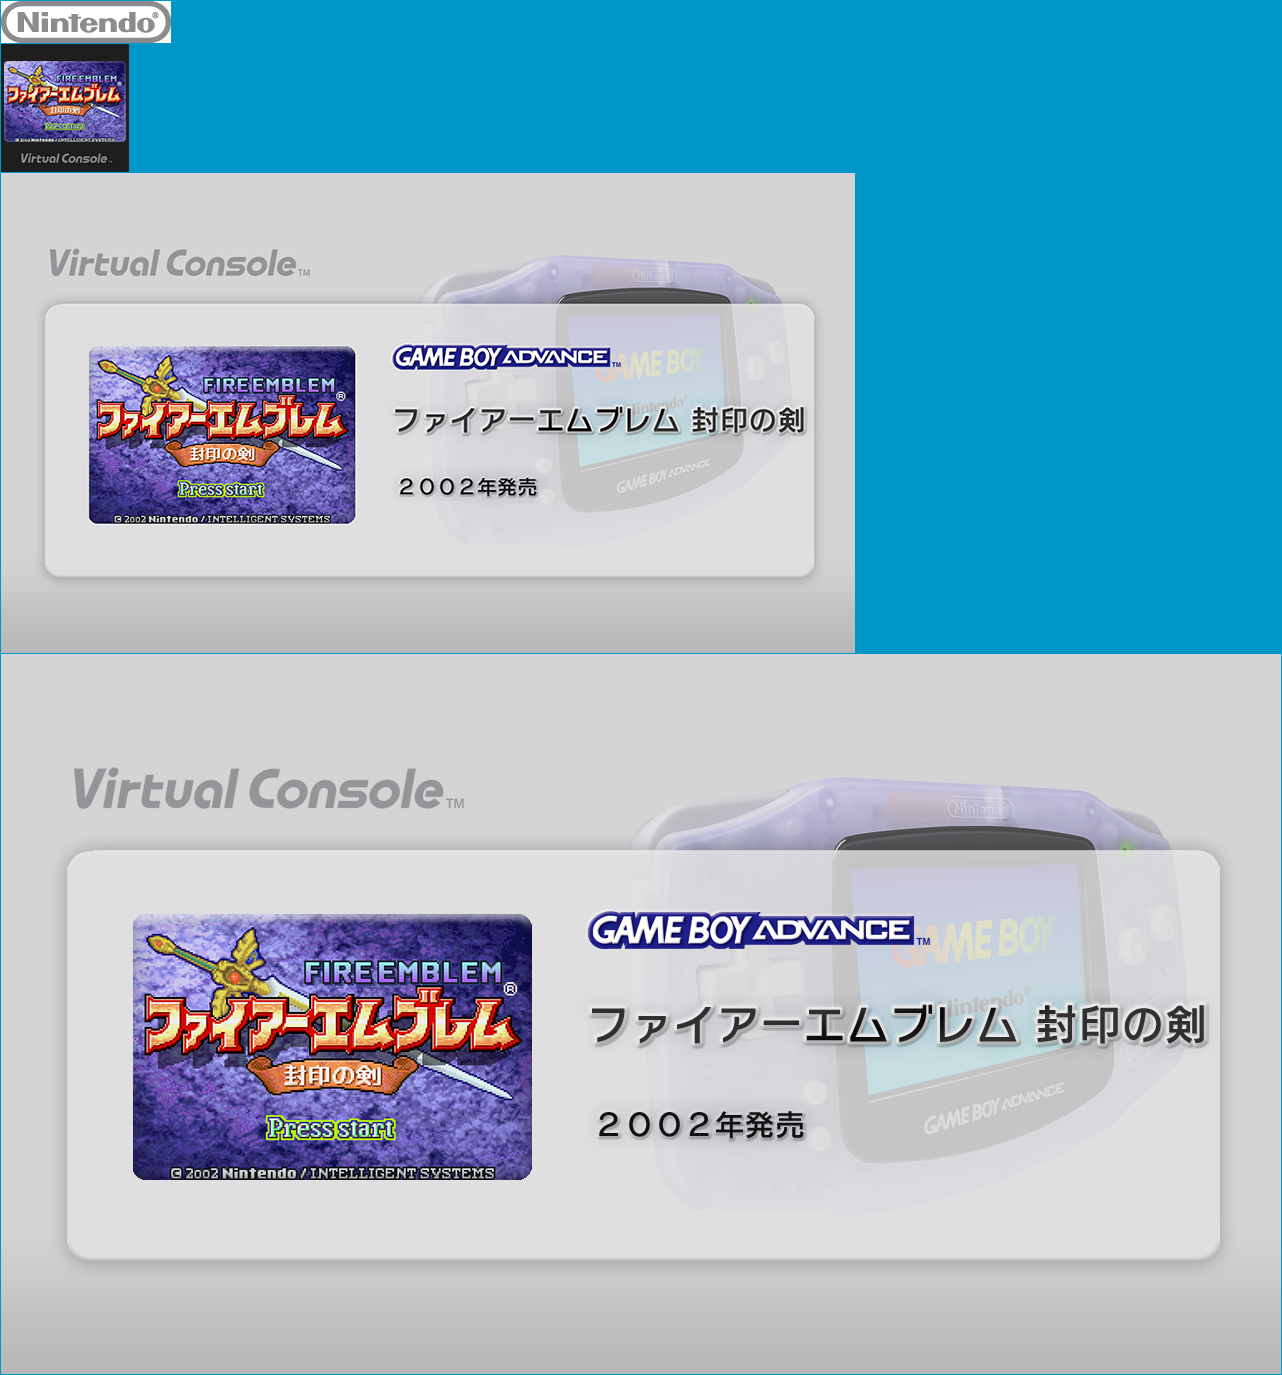 Virtual Console - Fire Emblem: Fūin no Tsurugi